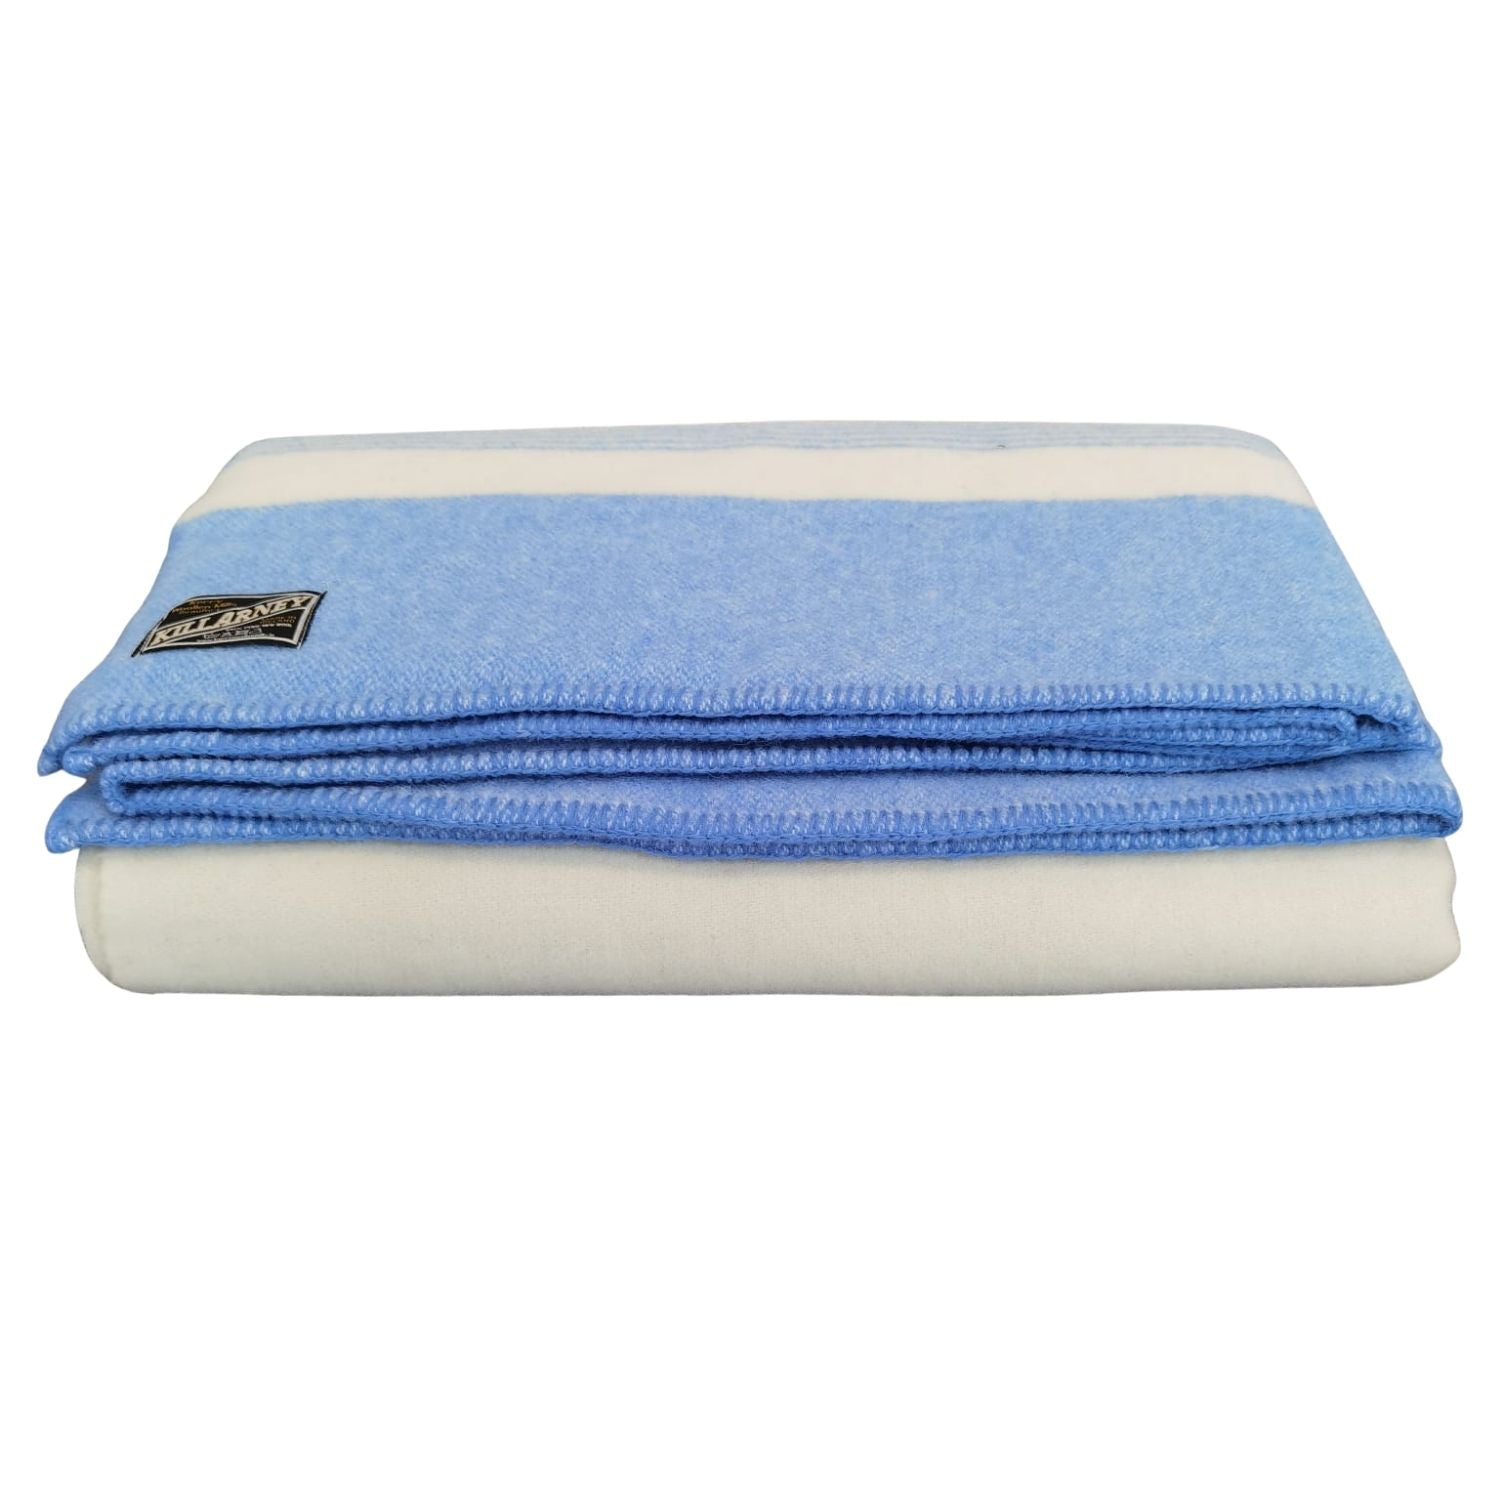 Kerry Woollen Mills 100% Pure Wool Blanket - White / Blue 3 Shaws Department Stores